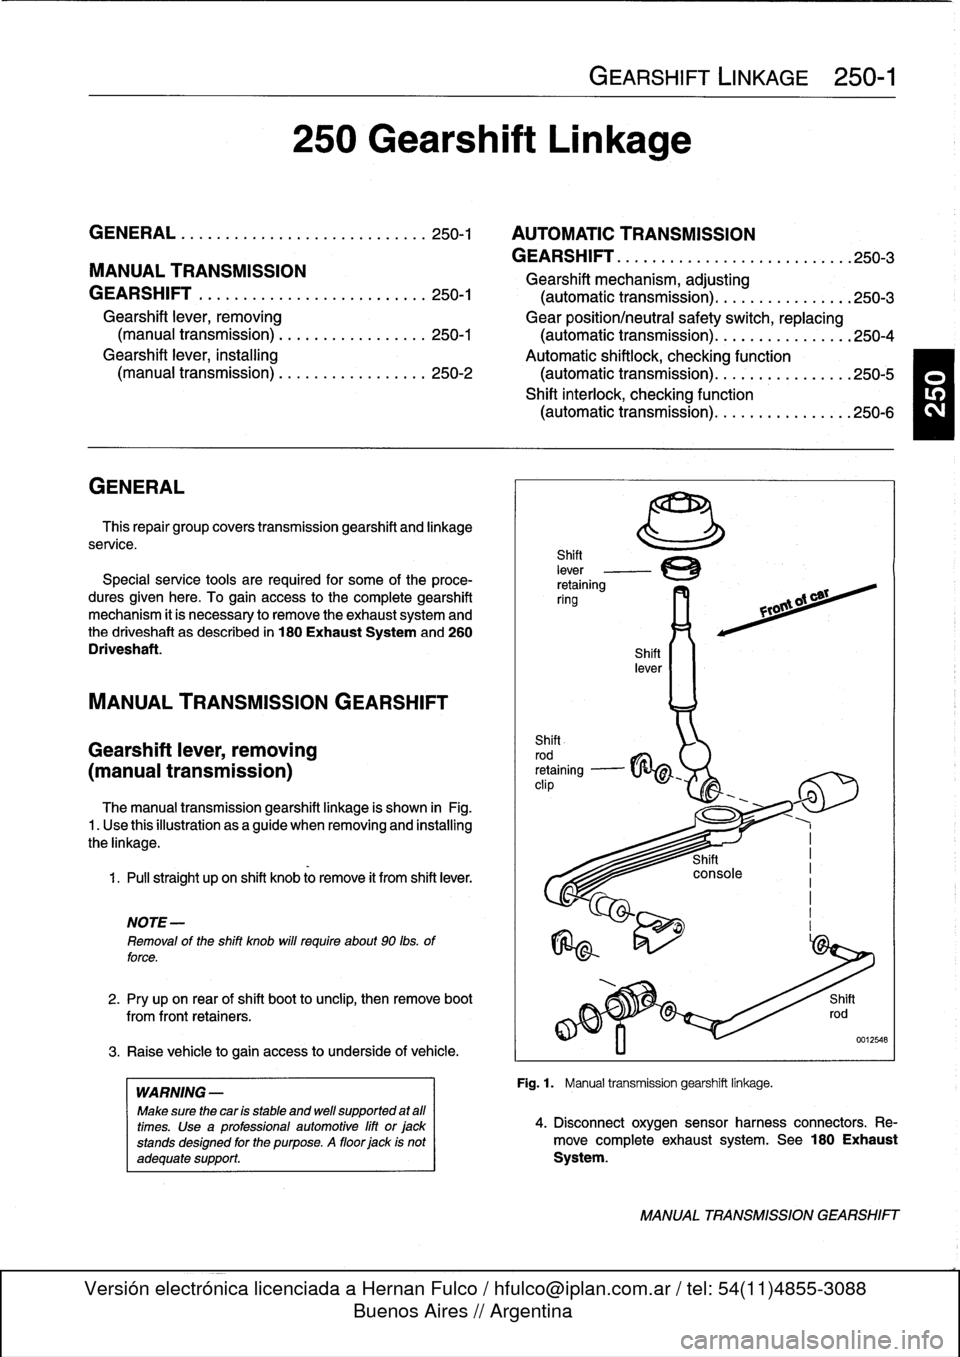 BMW 325i 1993 E36 Service Manual 
GENERAL
.
.
.
.
.
.
.
.
.
................
.
.
.
250-1

	

AUTOMATIC
TRANSMISSION
GEARSHIFT
...
.
.........
.
.
.
.
.
.
.
.
.
.
.
.
.
.
250-3
MANUAL
TRANSMISSION

	

Gearshift
mechanism,
adjusting
GE